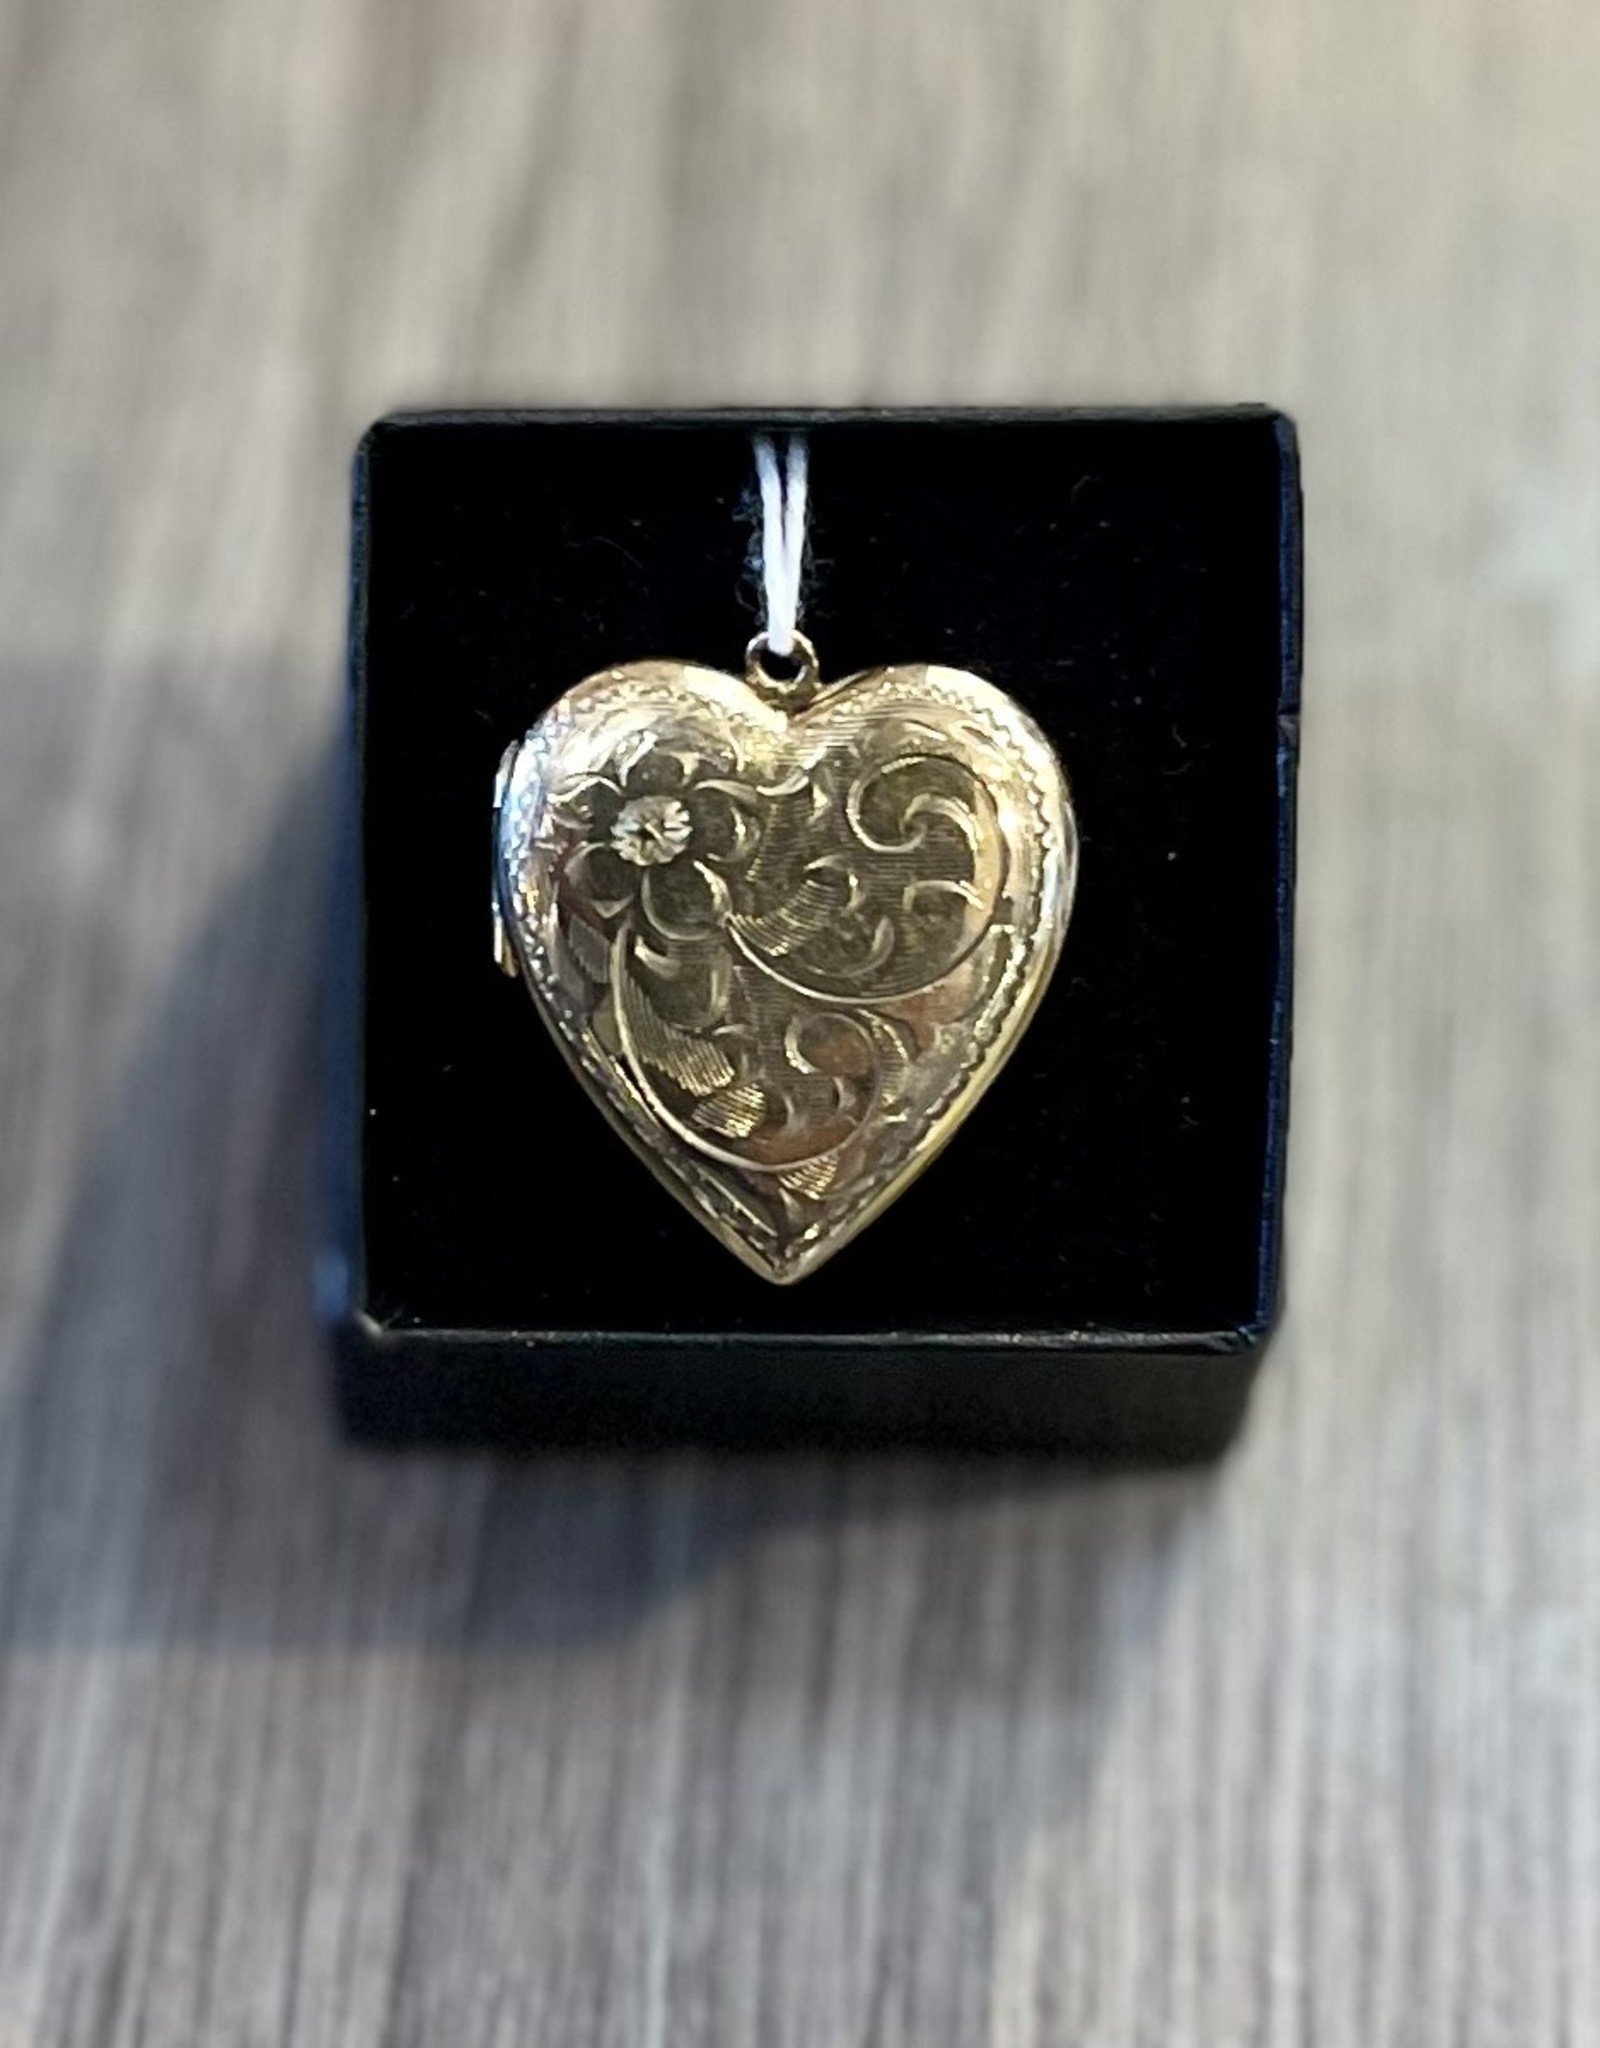 Jewelry - Vintage 10ct Gold Heart Locket